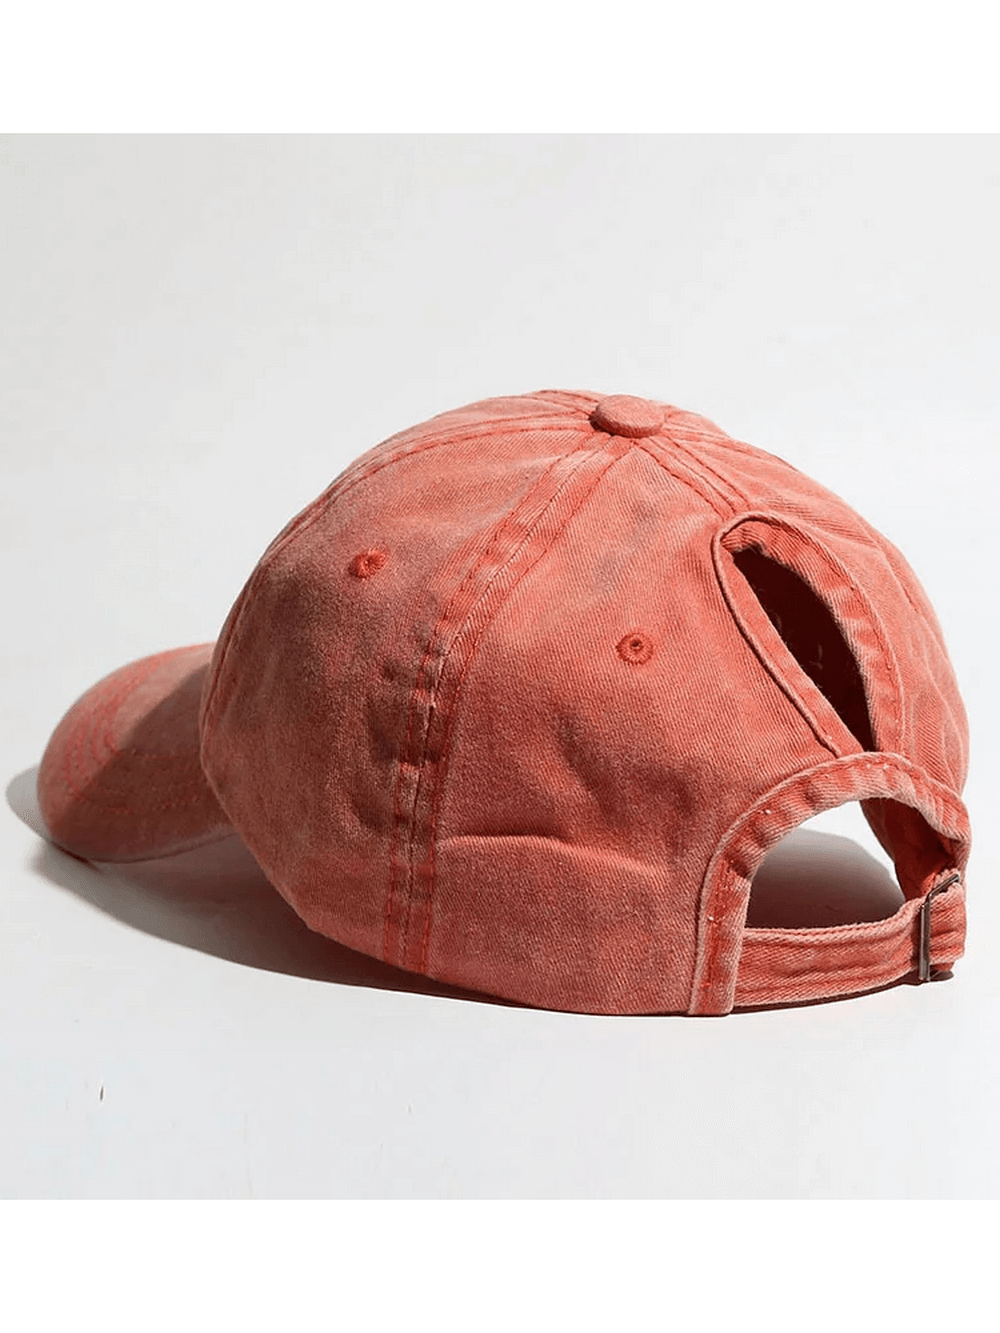 Women's Adjustable Solid Color Baseball Cap - SF2239